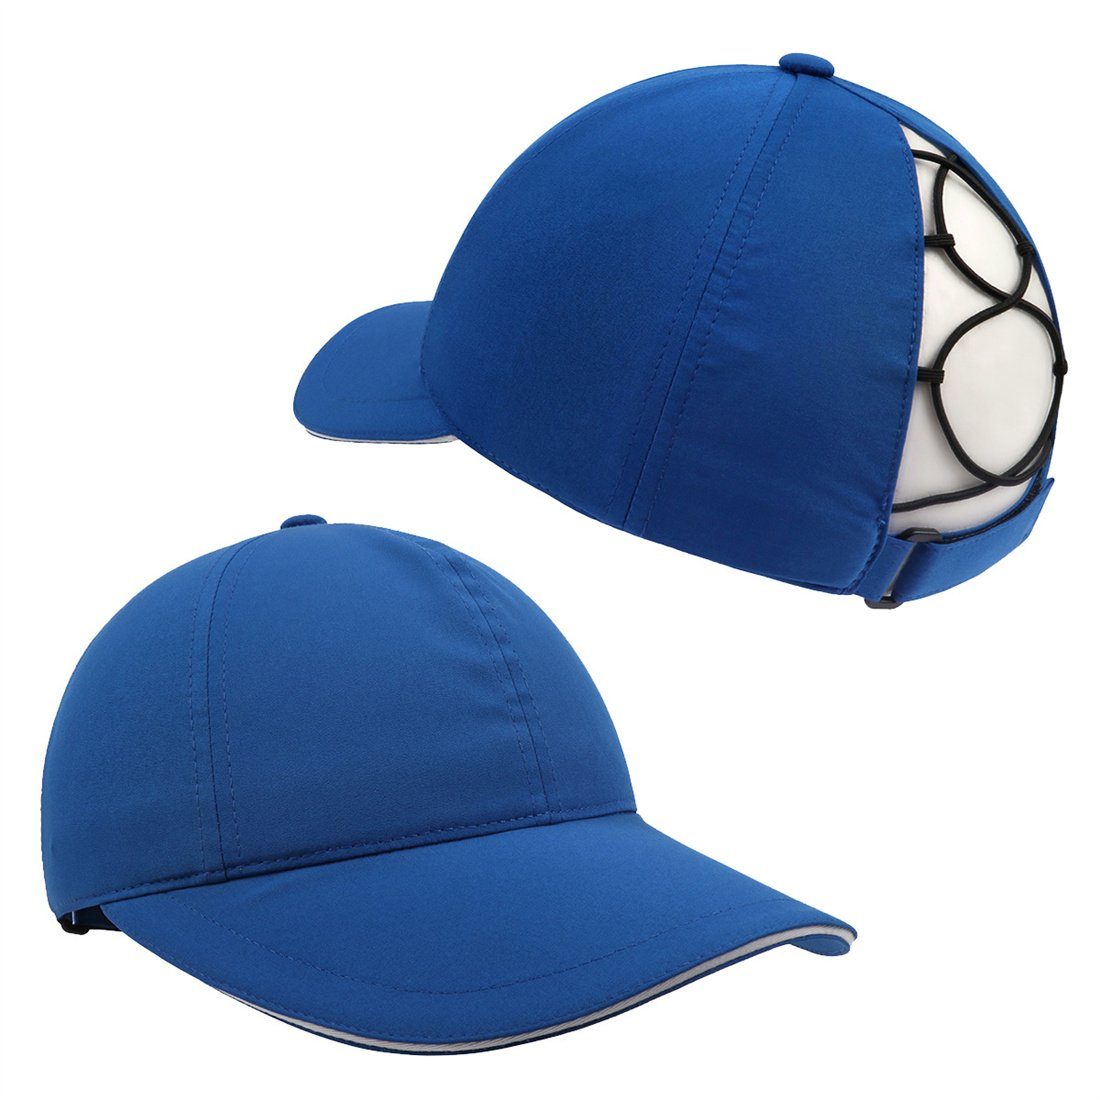 DÖRÖY Baseball Cap Outdoor-Baseballkappe für Frauen,schnell trocknende Kappe,Sonnenblende blau | Baseball Caps